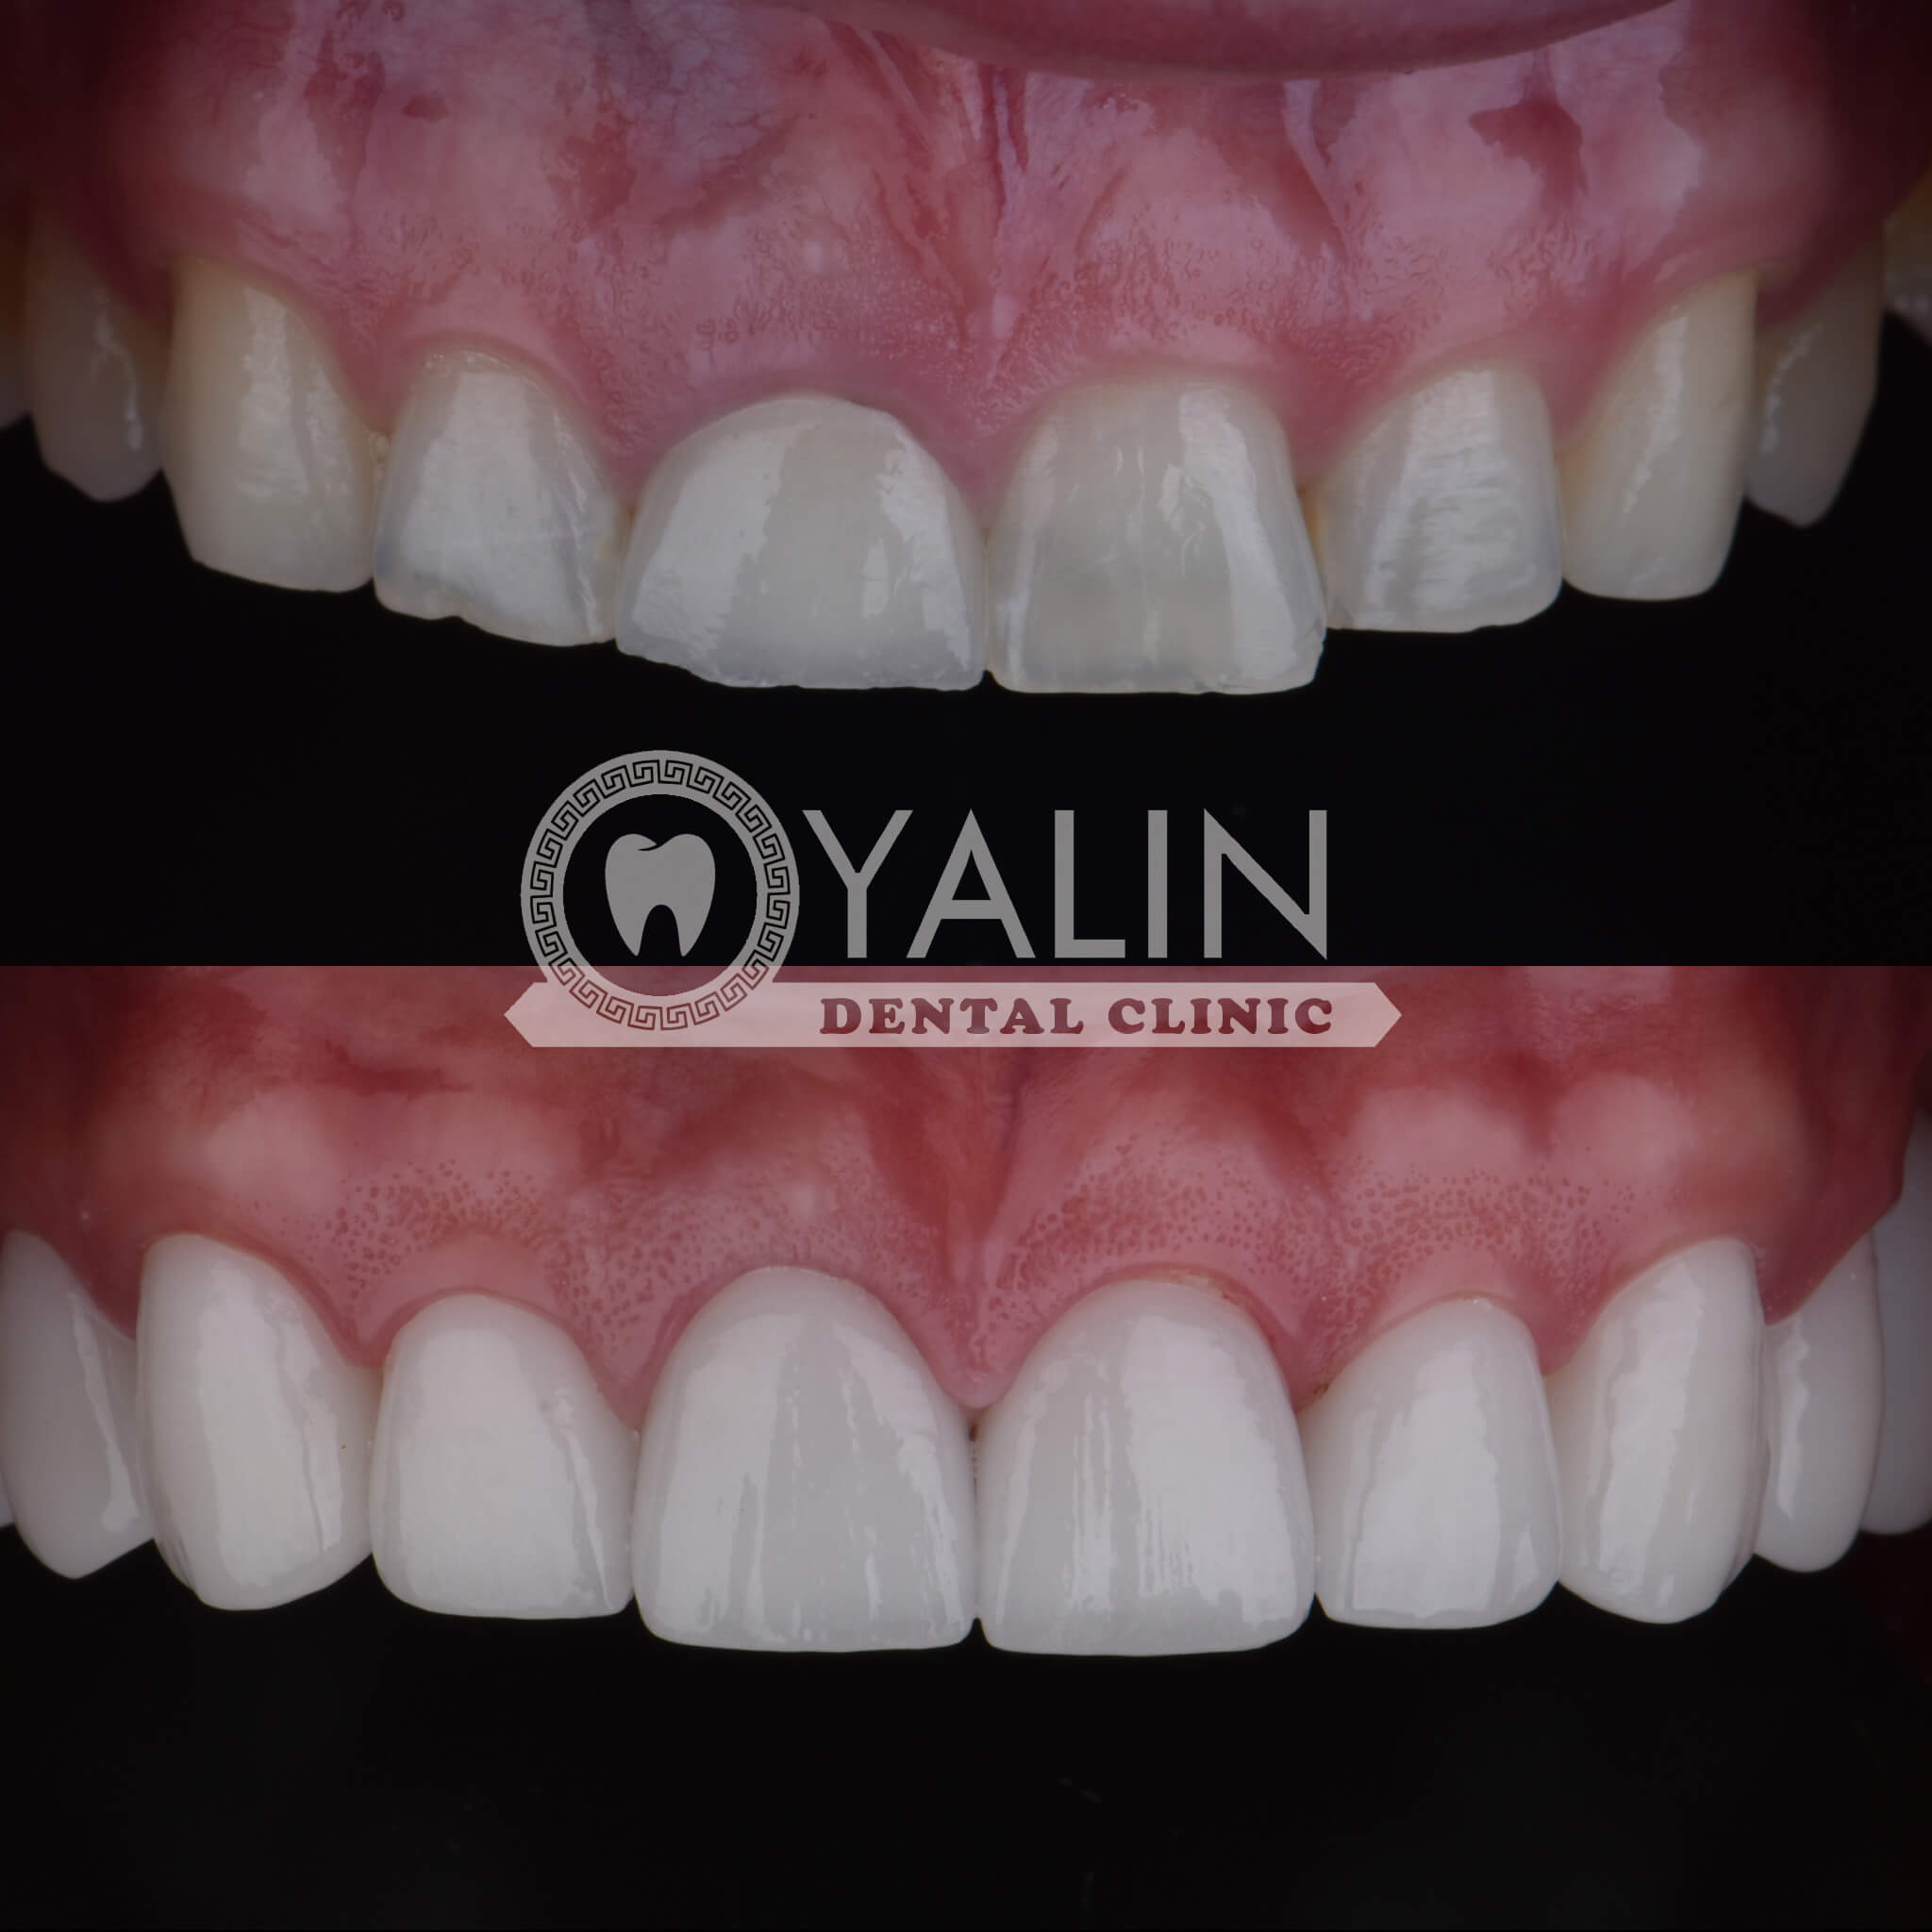 Ya Kont - Dental Clinic Antalya – FR - Yalın Dental Clinic